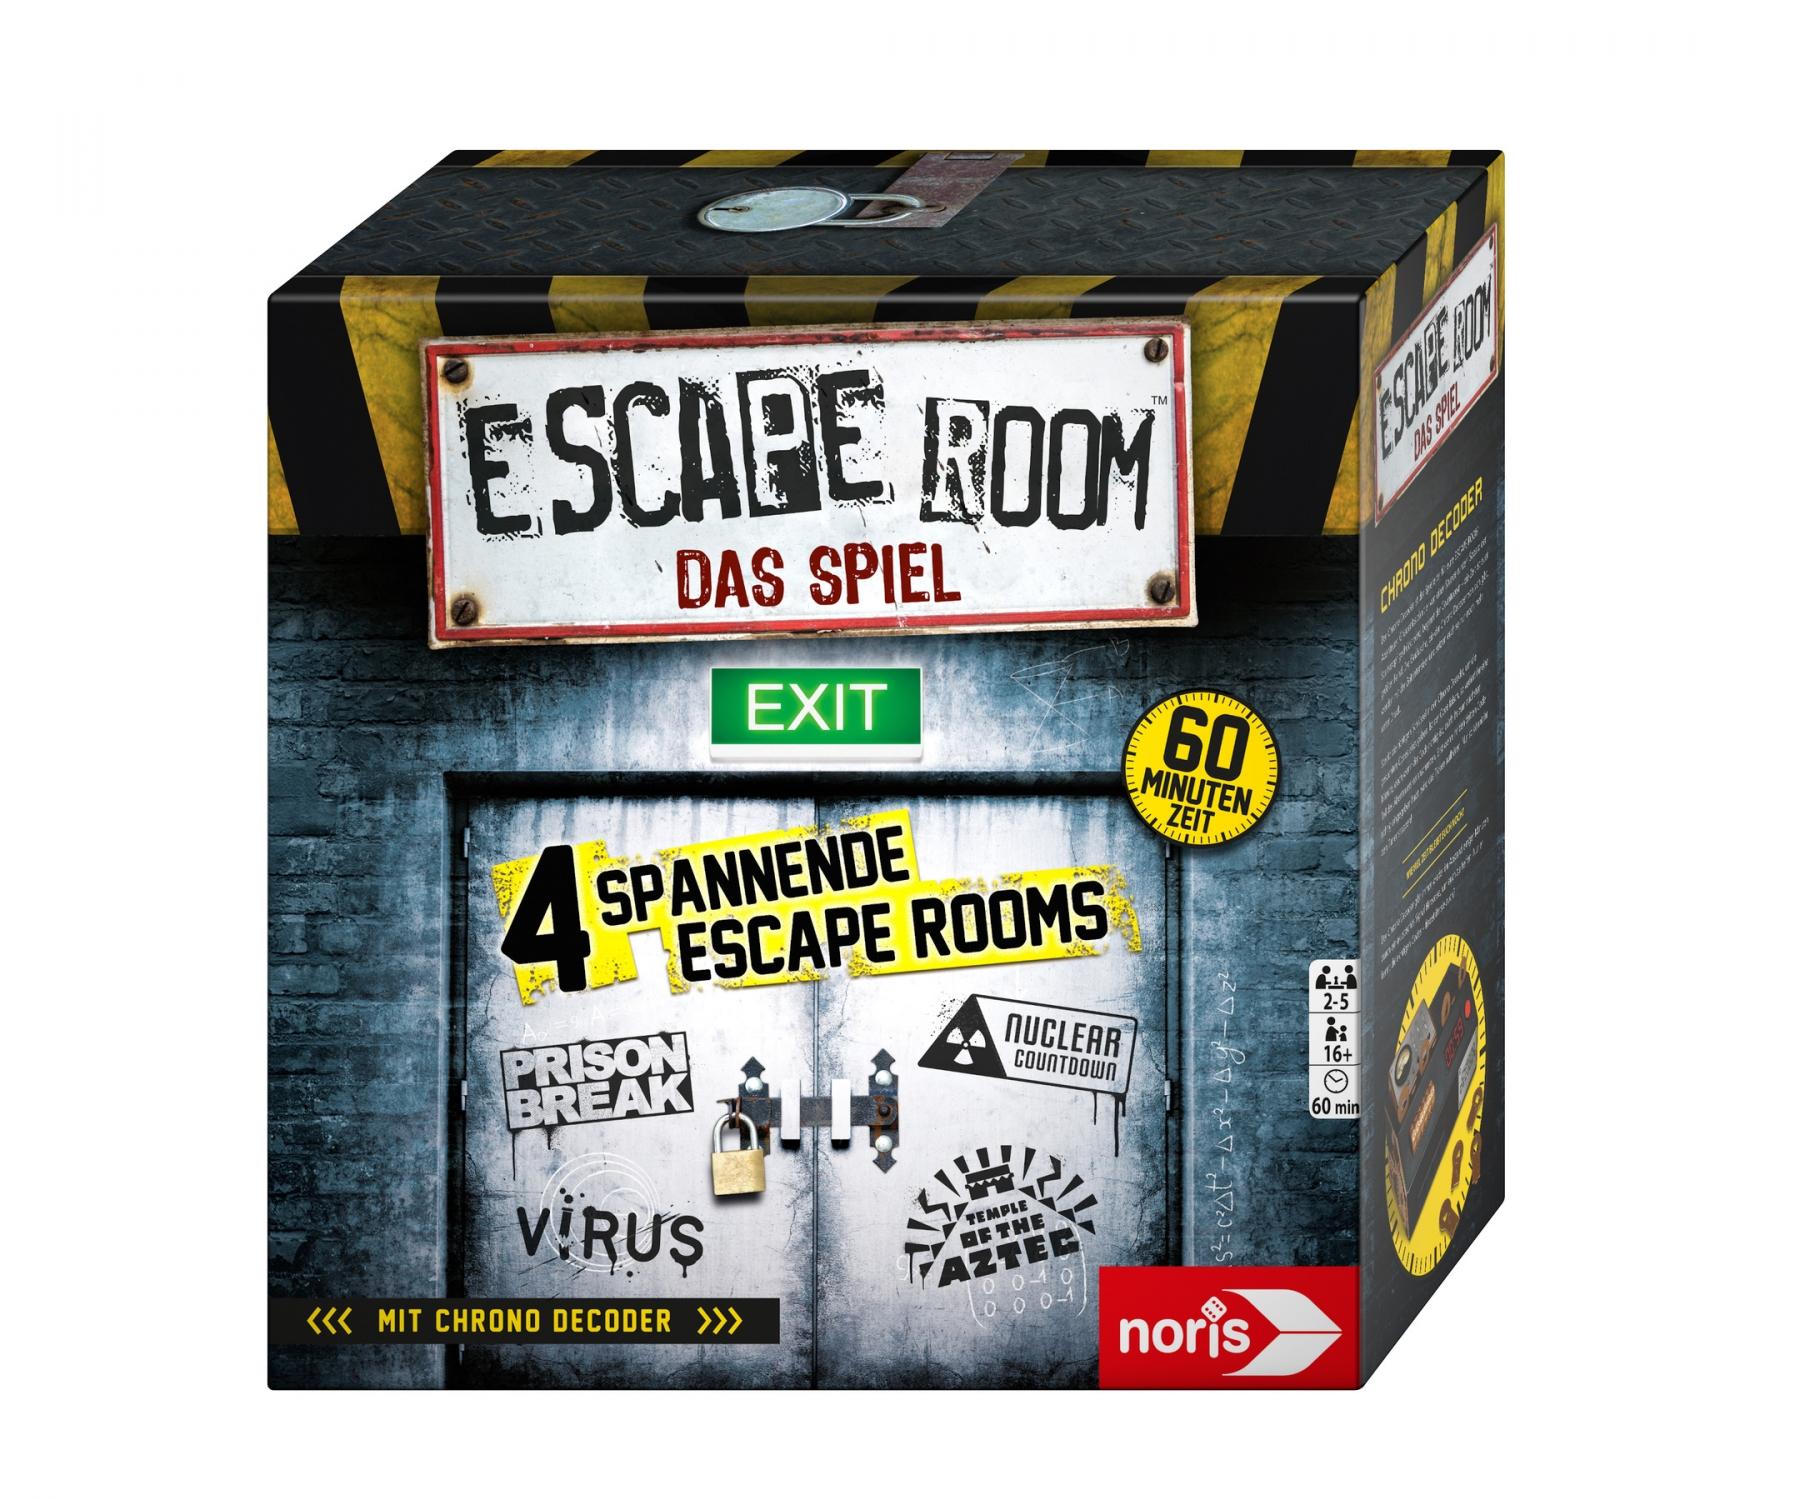 Noris Gesellschaftsspiel "Escape Room" - Das Spiel